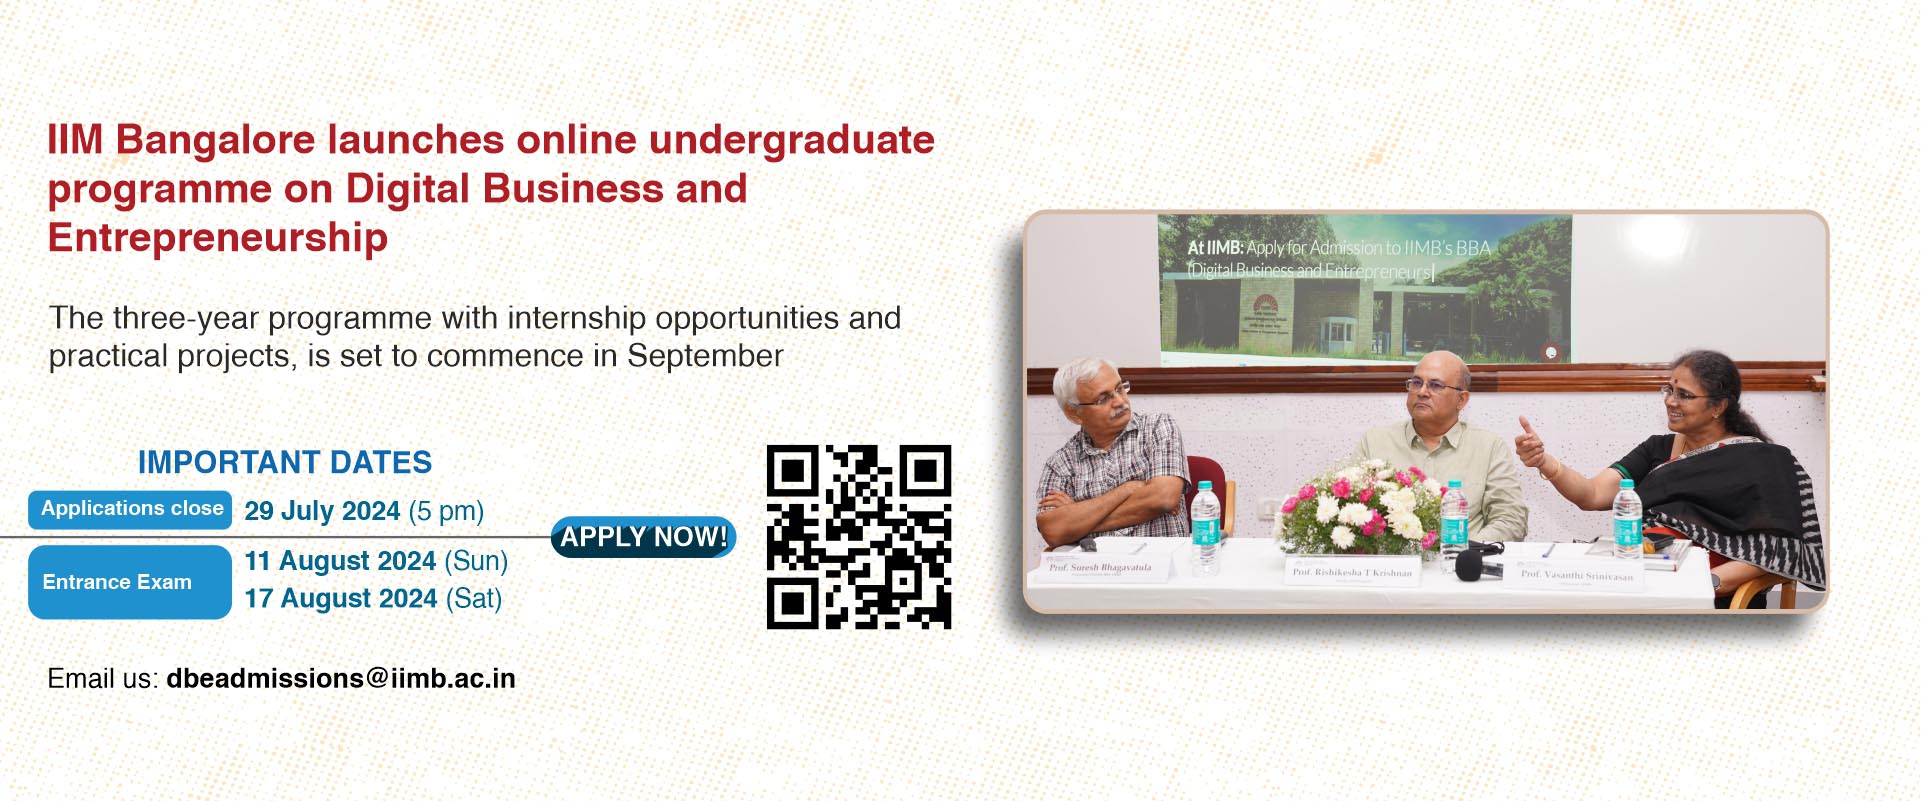  IIM Bangalore launches online undergraduate programme on Digital Business and Entrepreneurship 